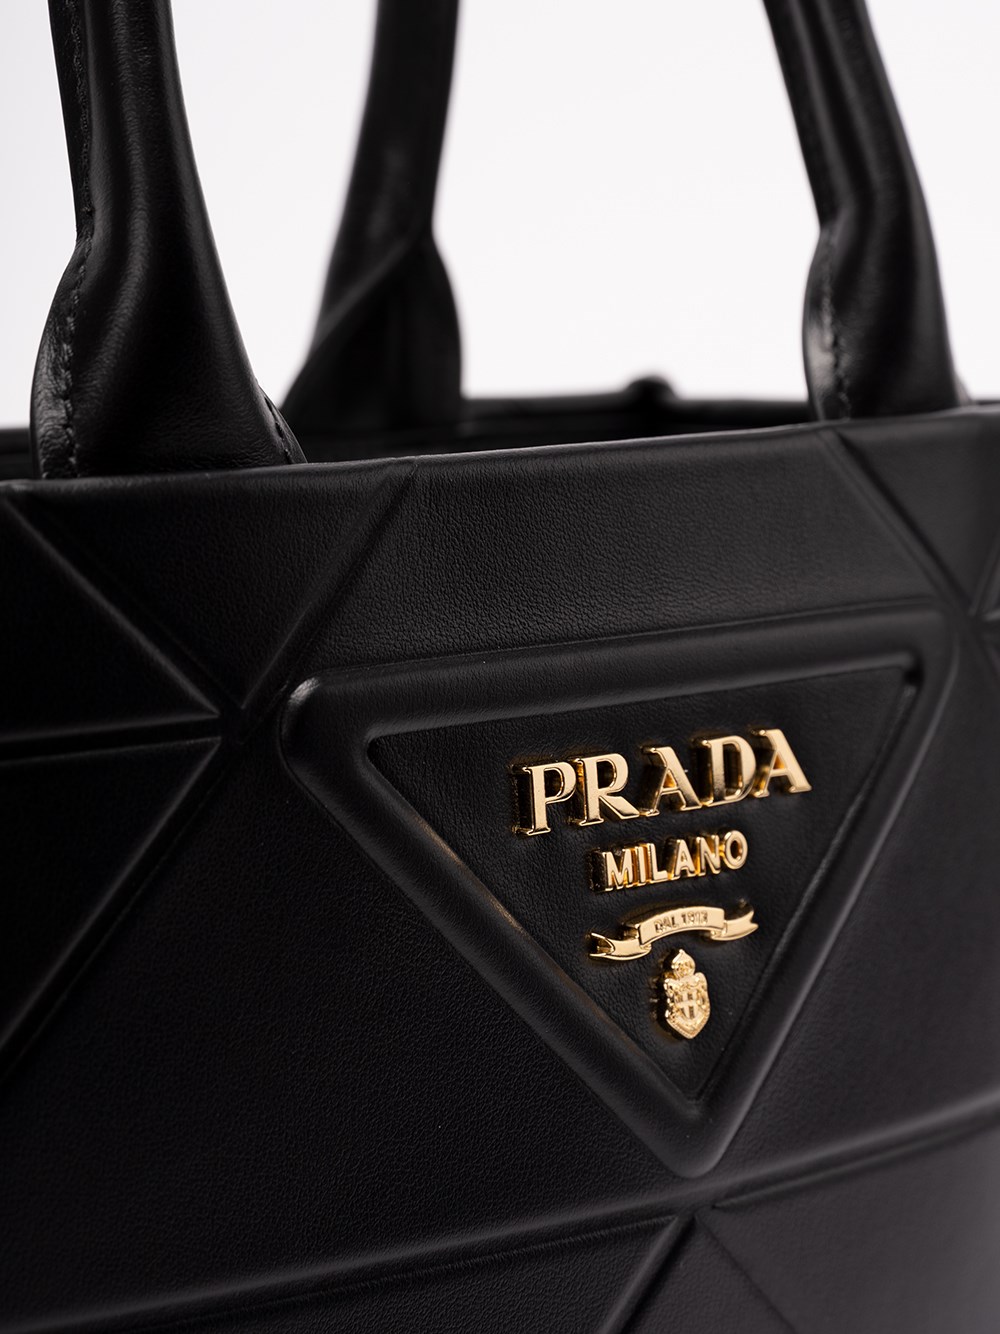 Prada Prada Quilted Padded Tote Bag In Black Nylon on SALE